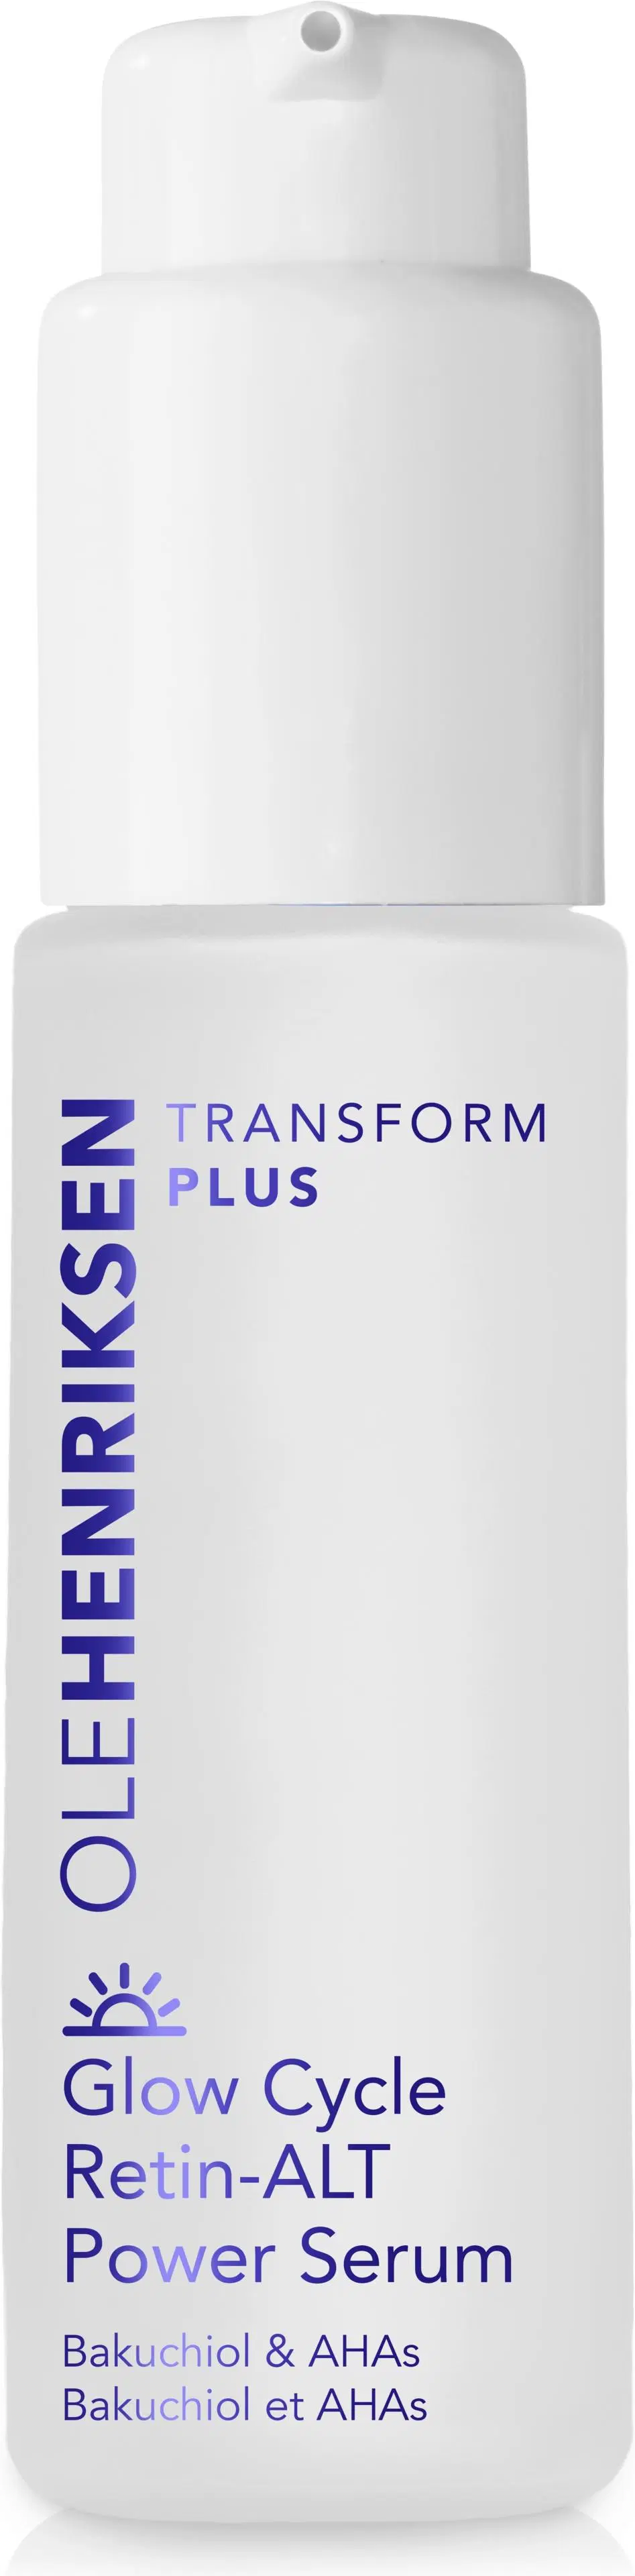 OleHenriksen Transform Plus Glow Cycle Retin-ALT Power Serum tehoseerumi 30 ml